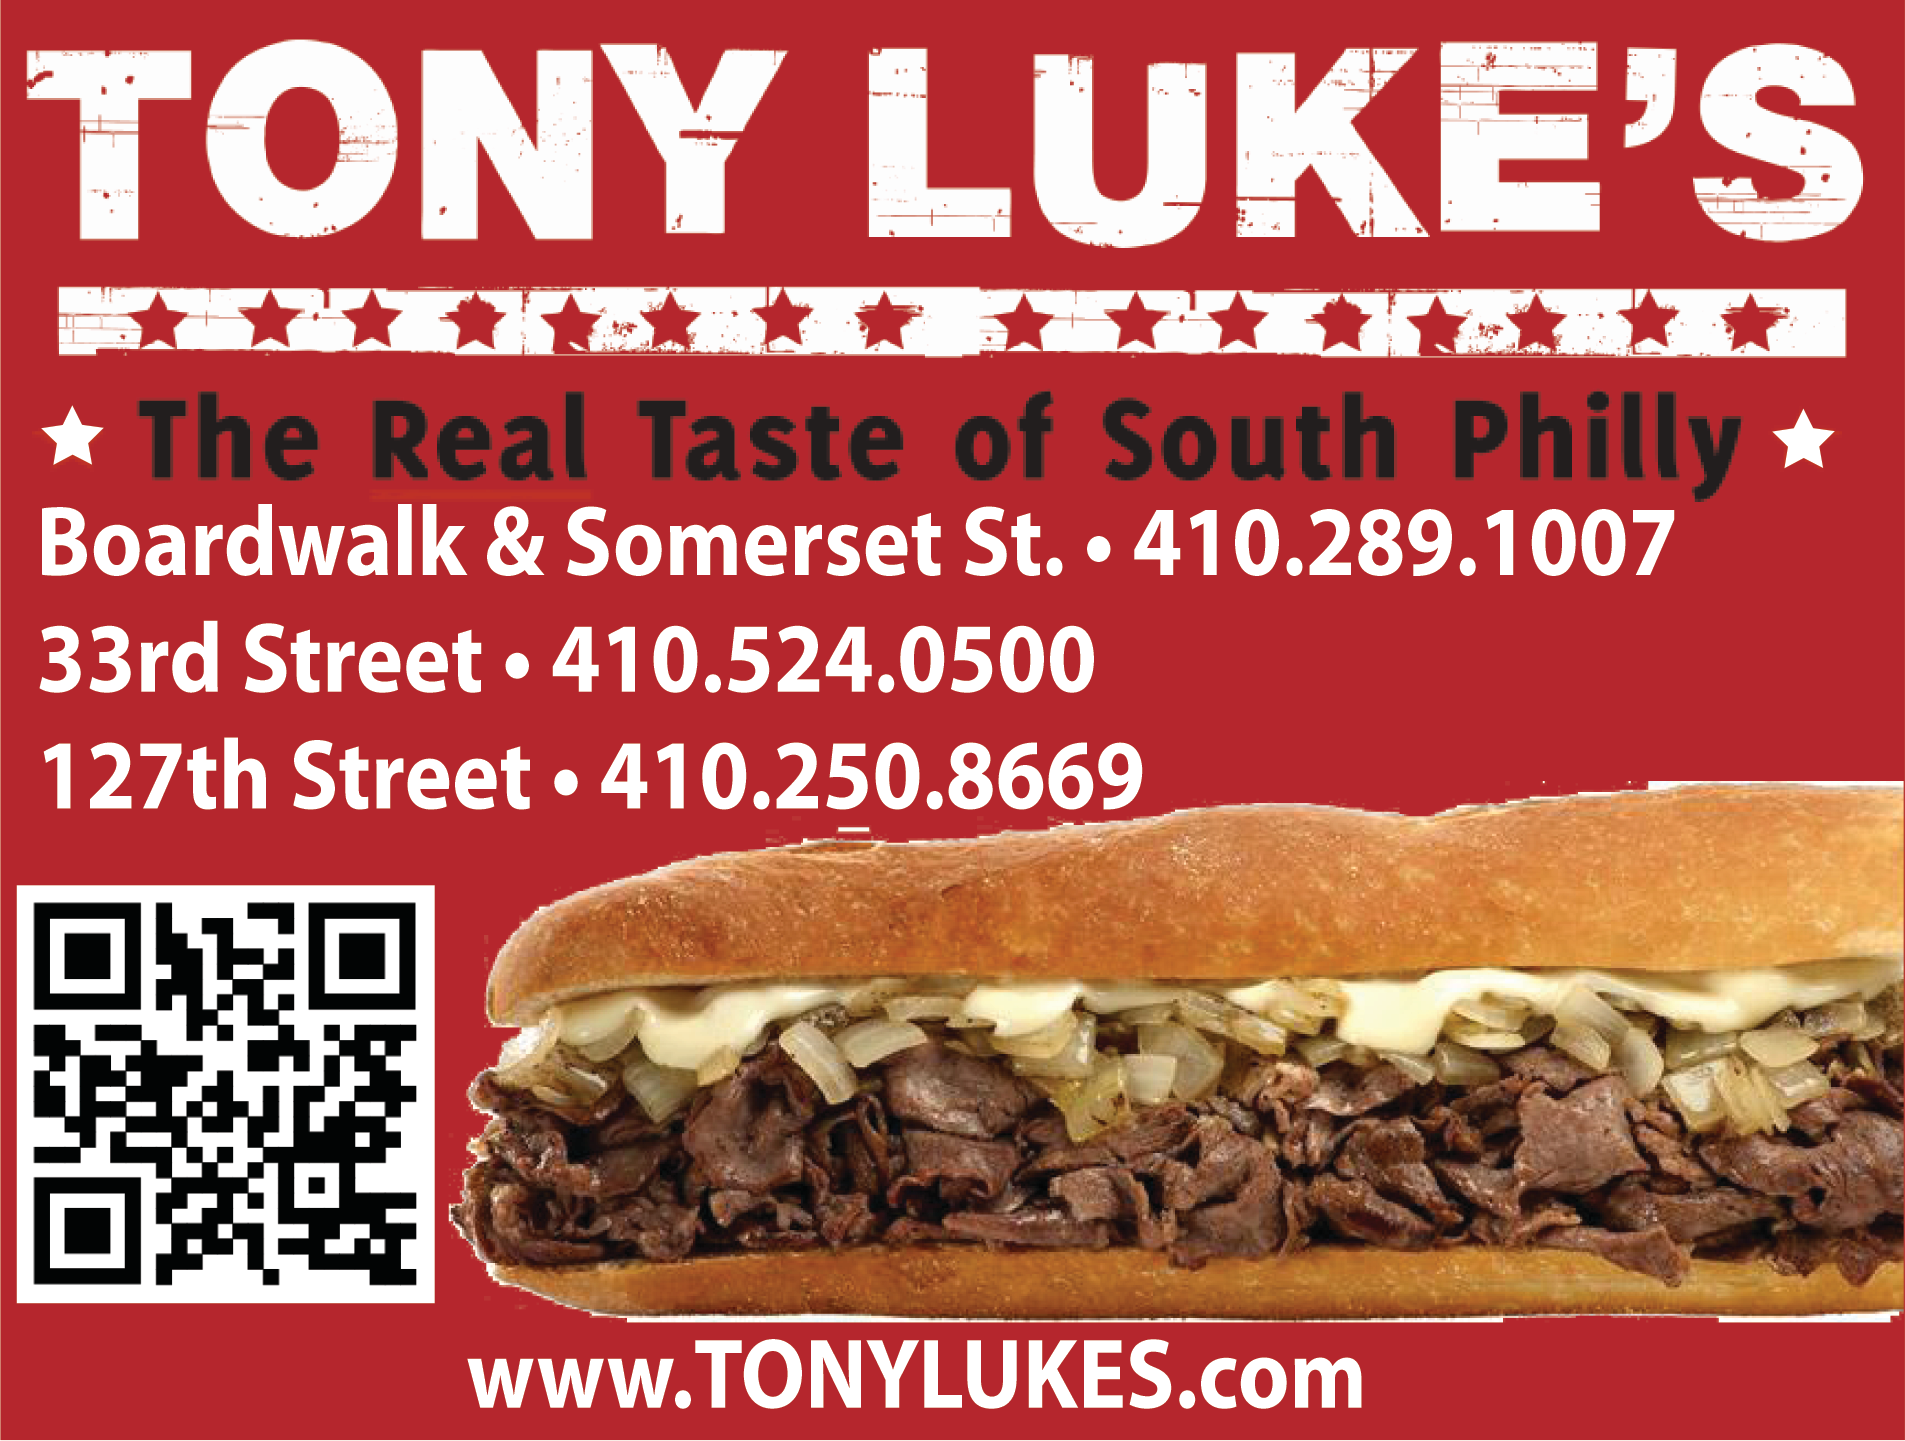 TONY LUKE'S Print Ad